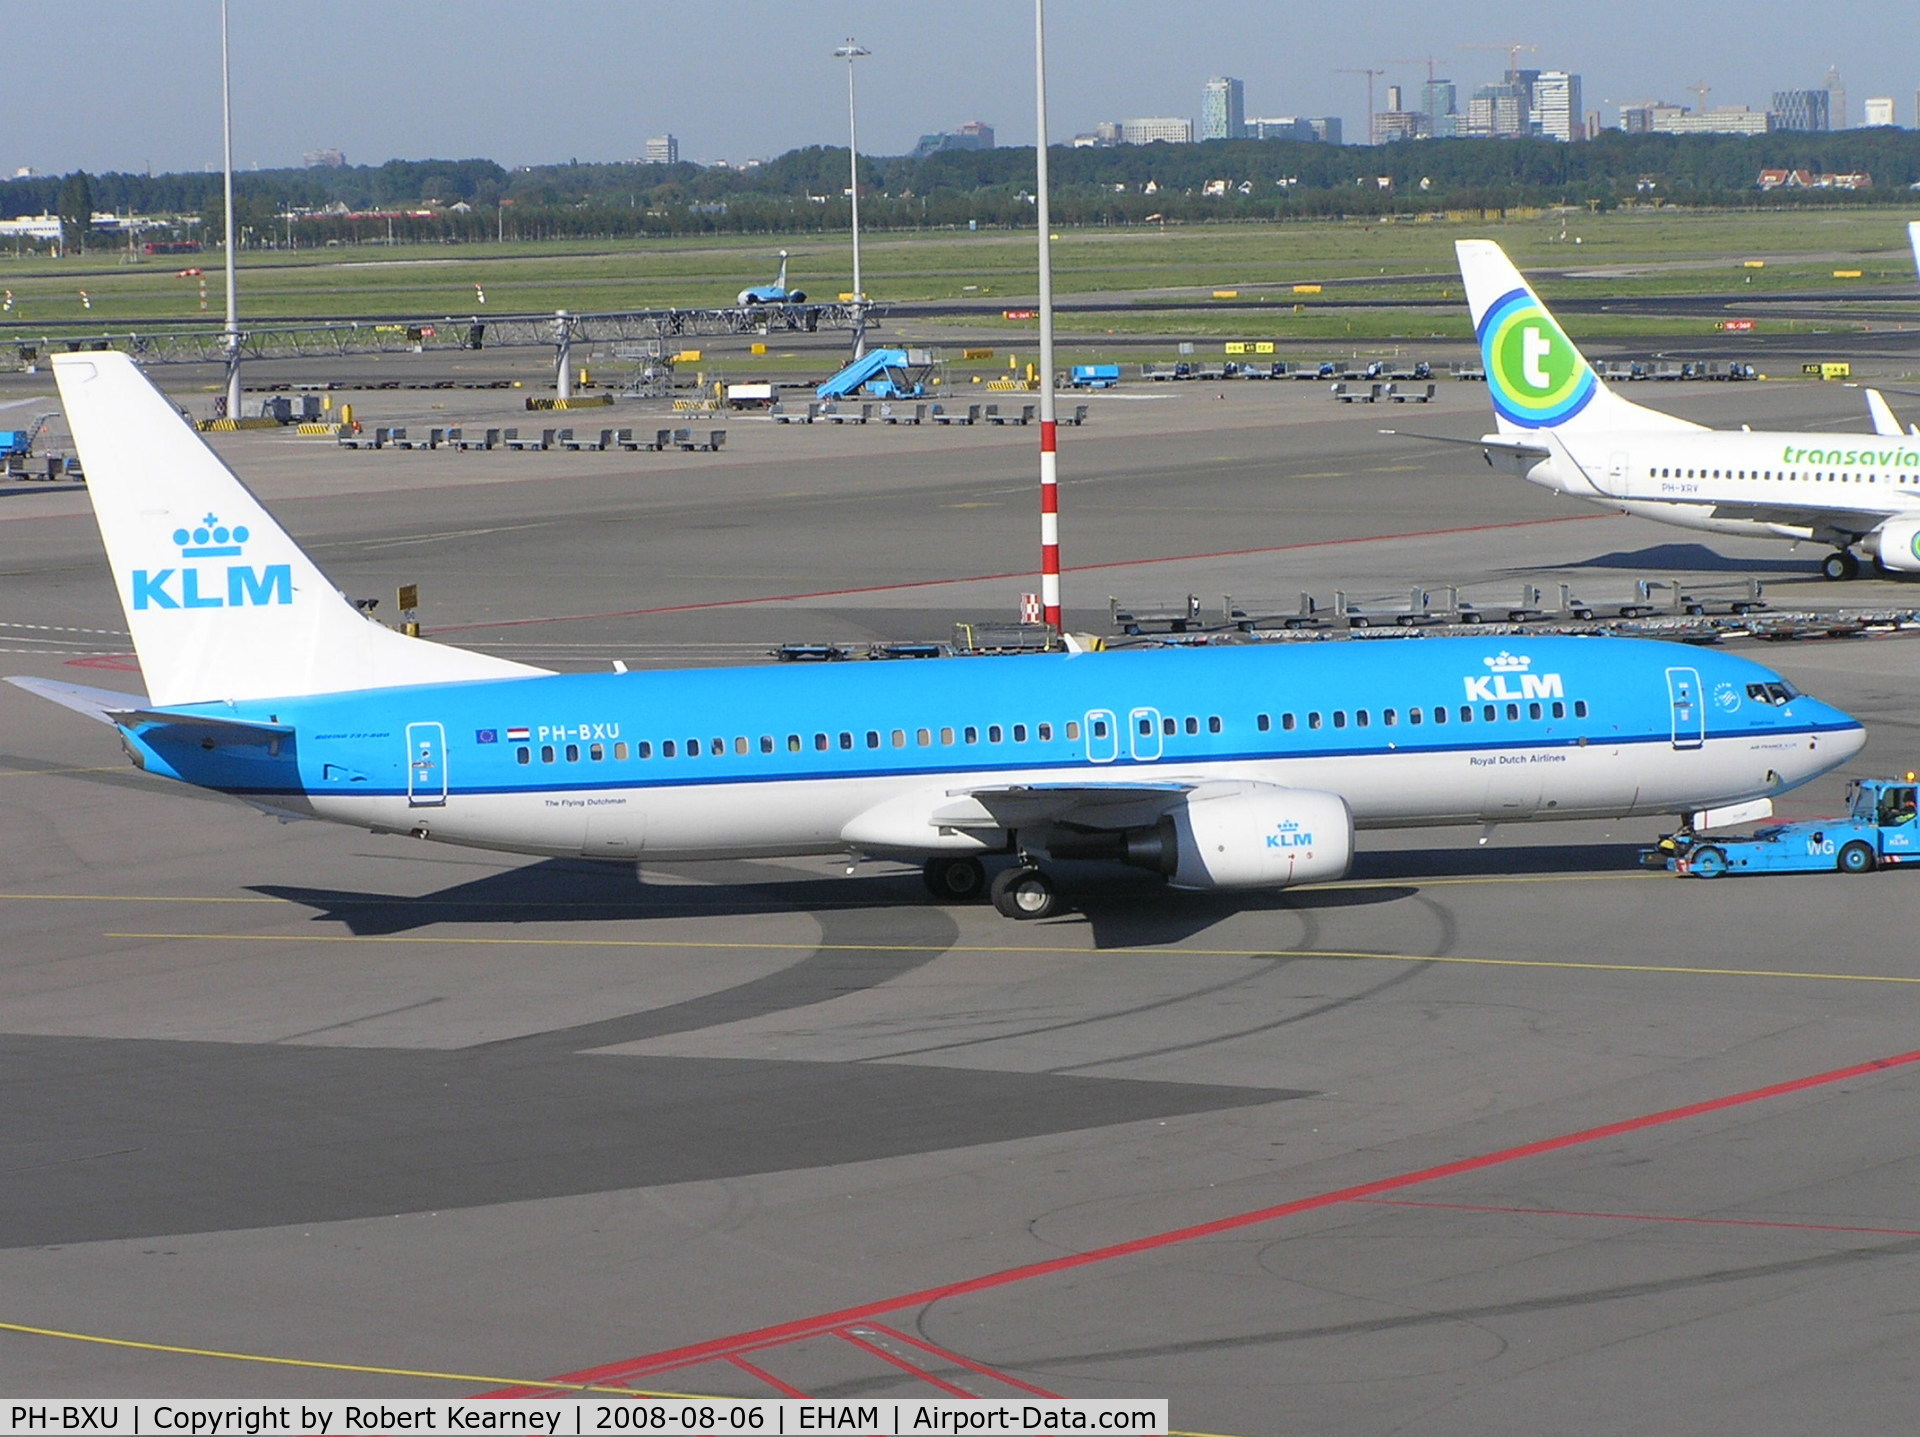 PH-BXU, 2006 Boeing 737-8BK C/N 33028, KLM being towed onto stand